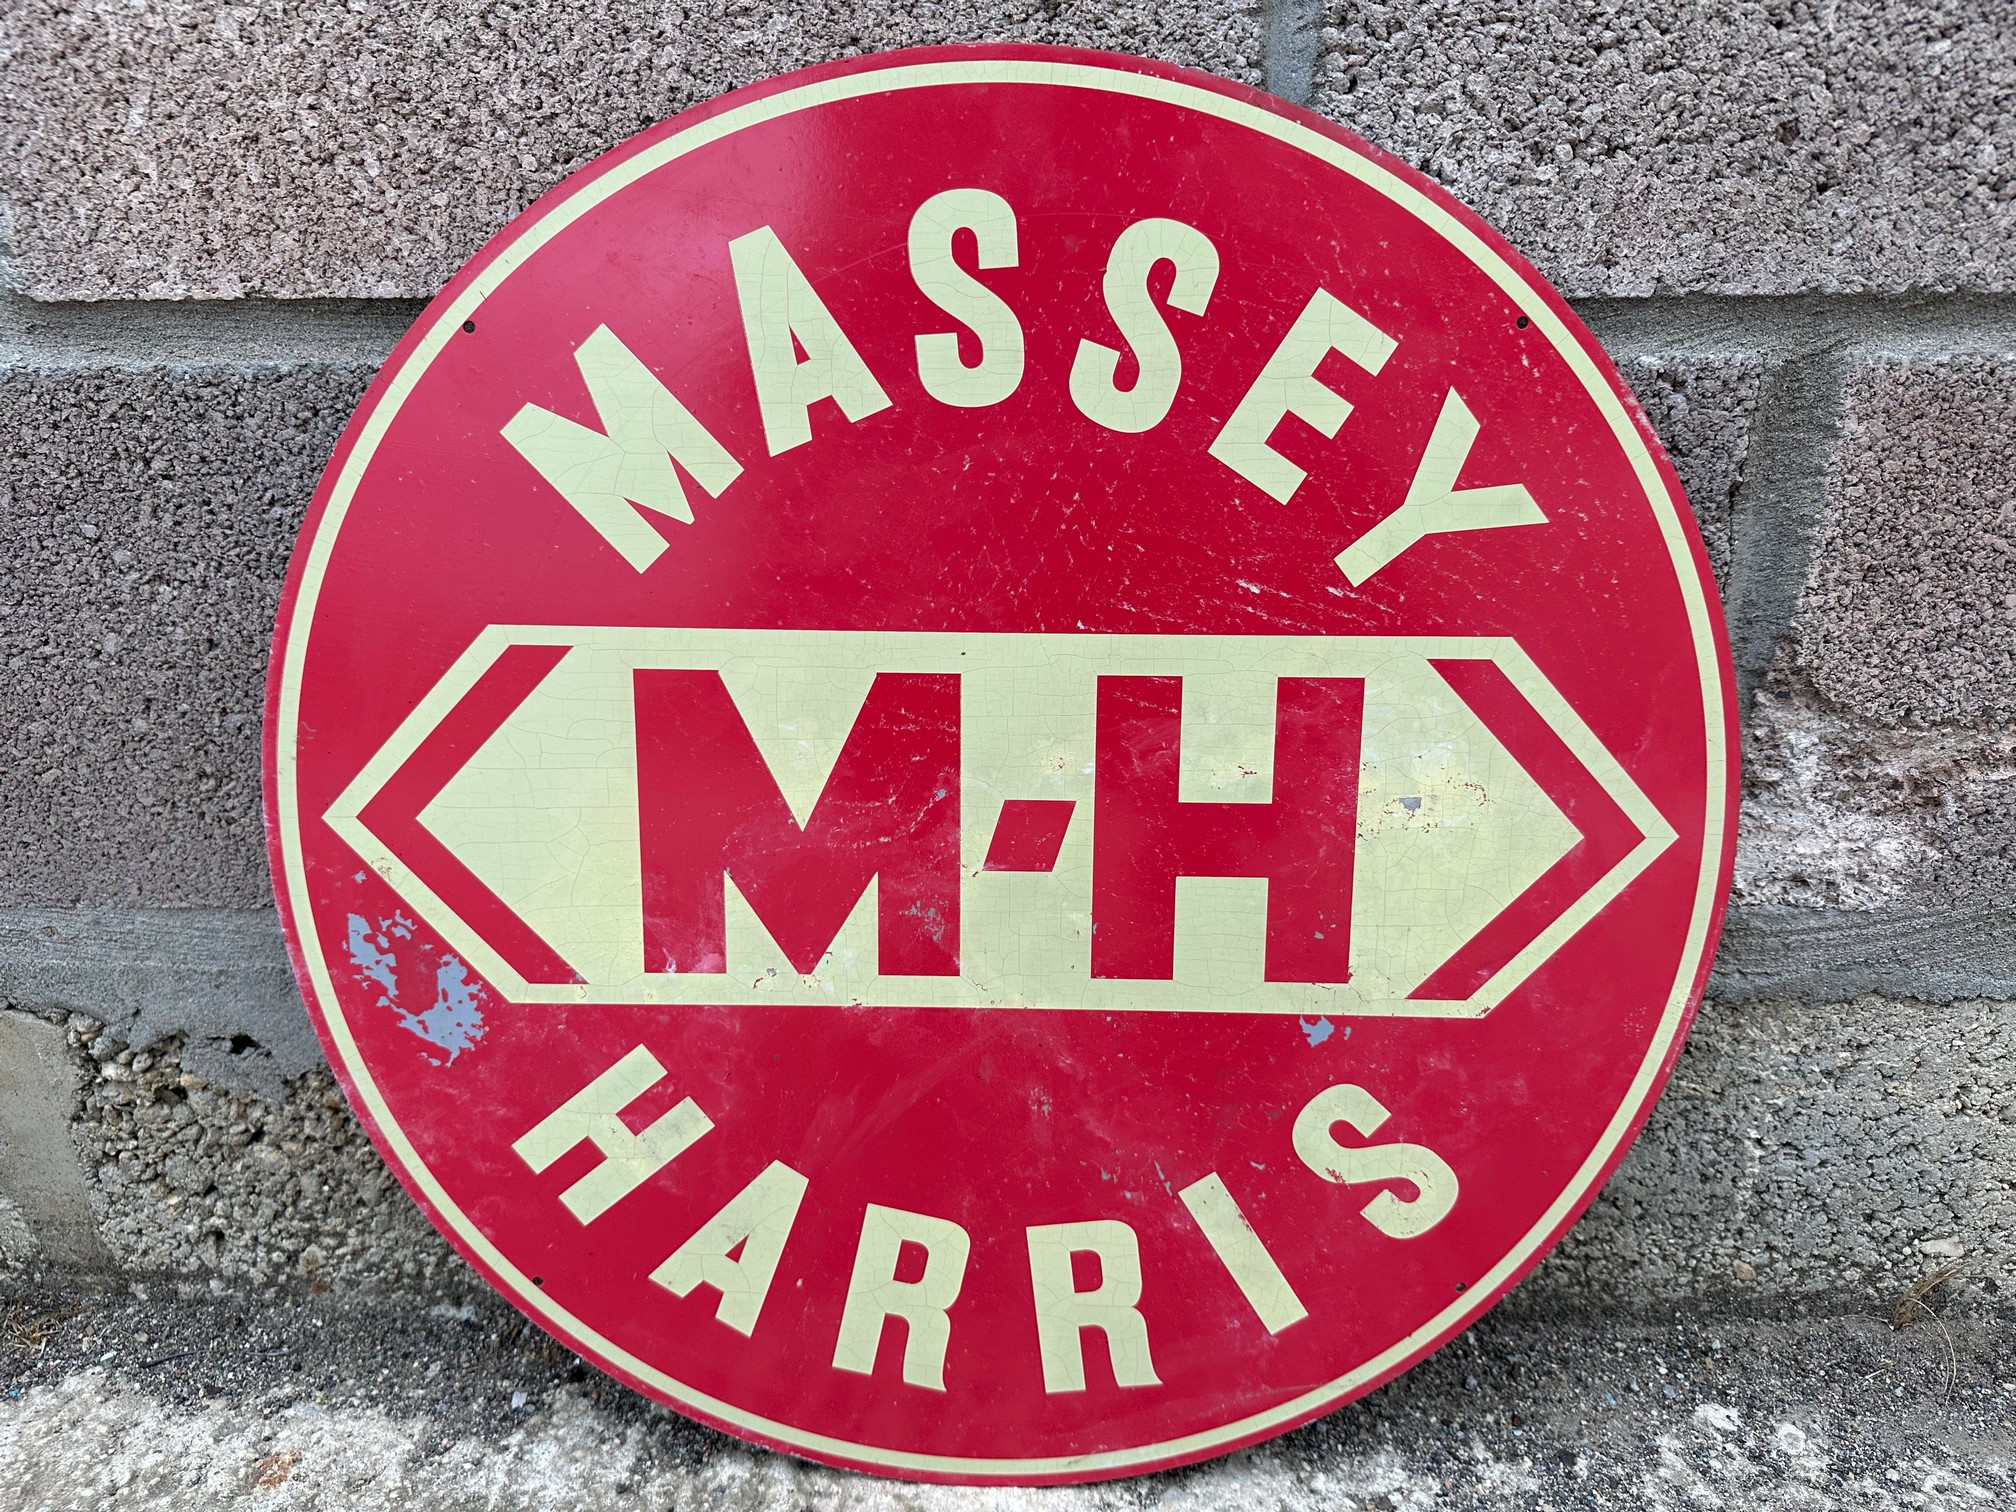 A circular Massey Harris aluminium advertising sign, 21" diameter.